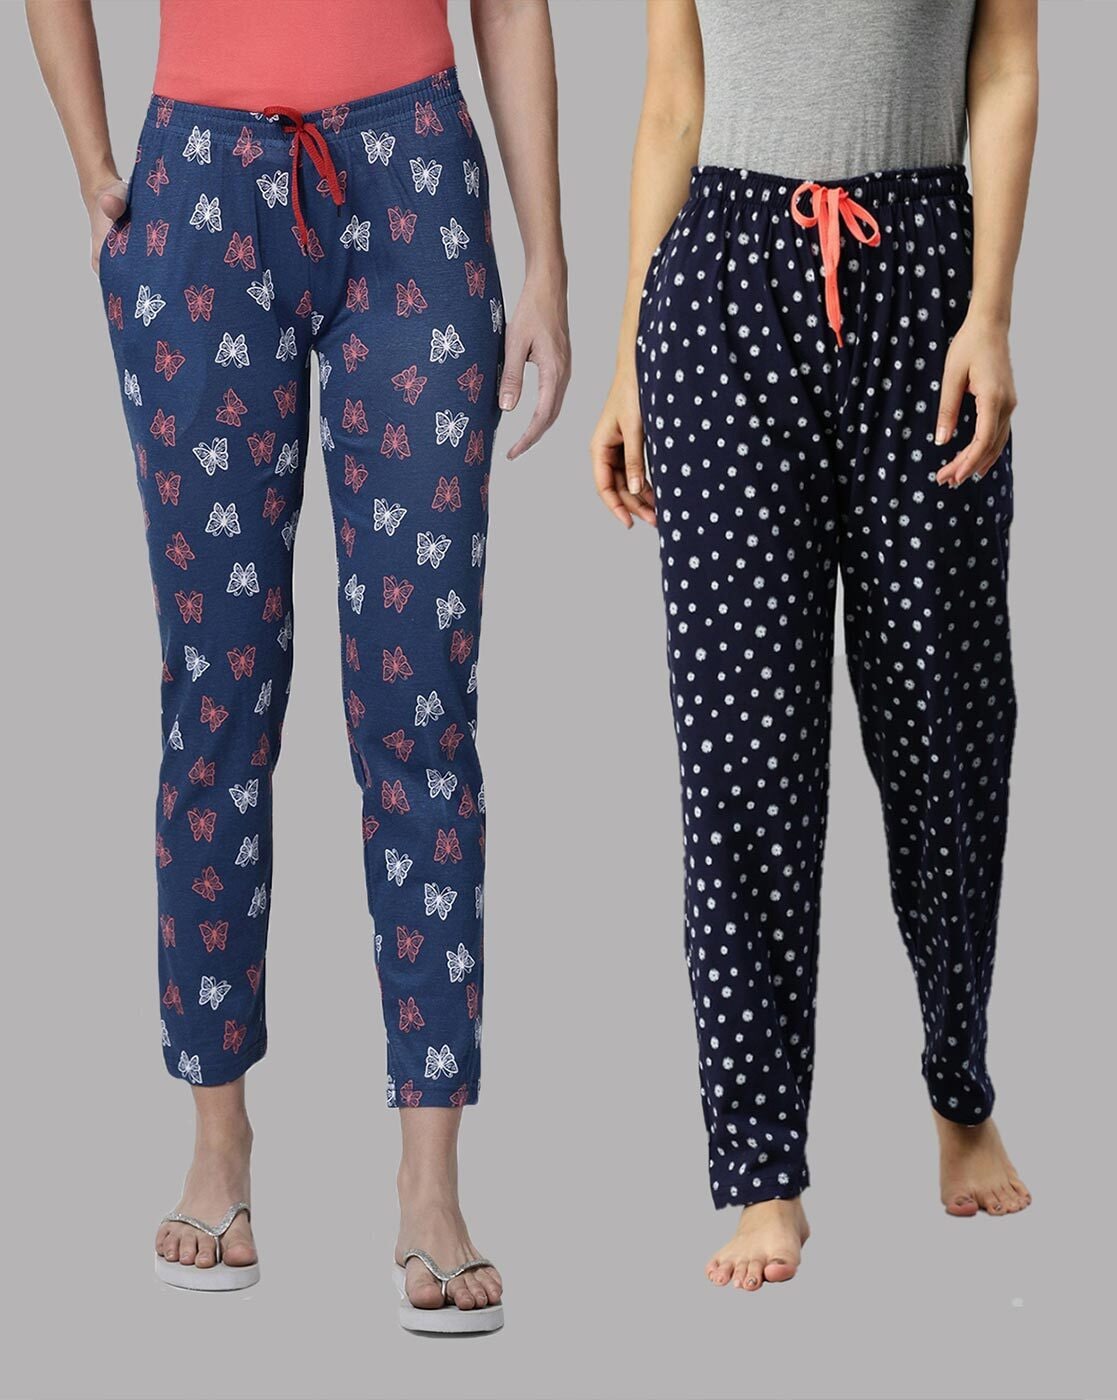 Buy night pants women's in India @ Limeroad